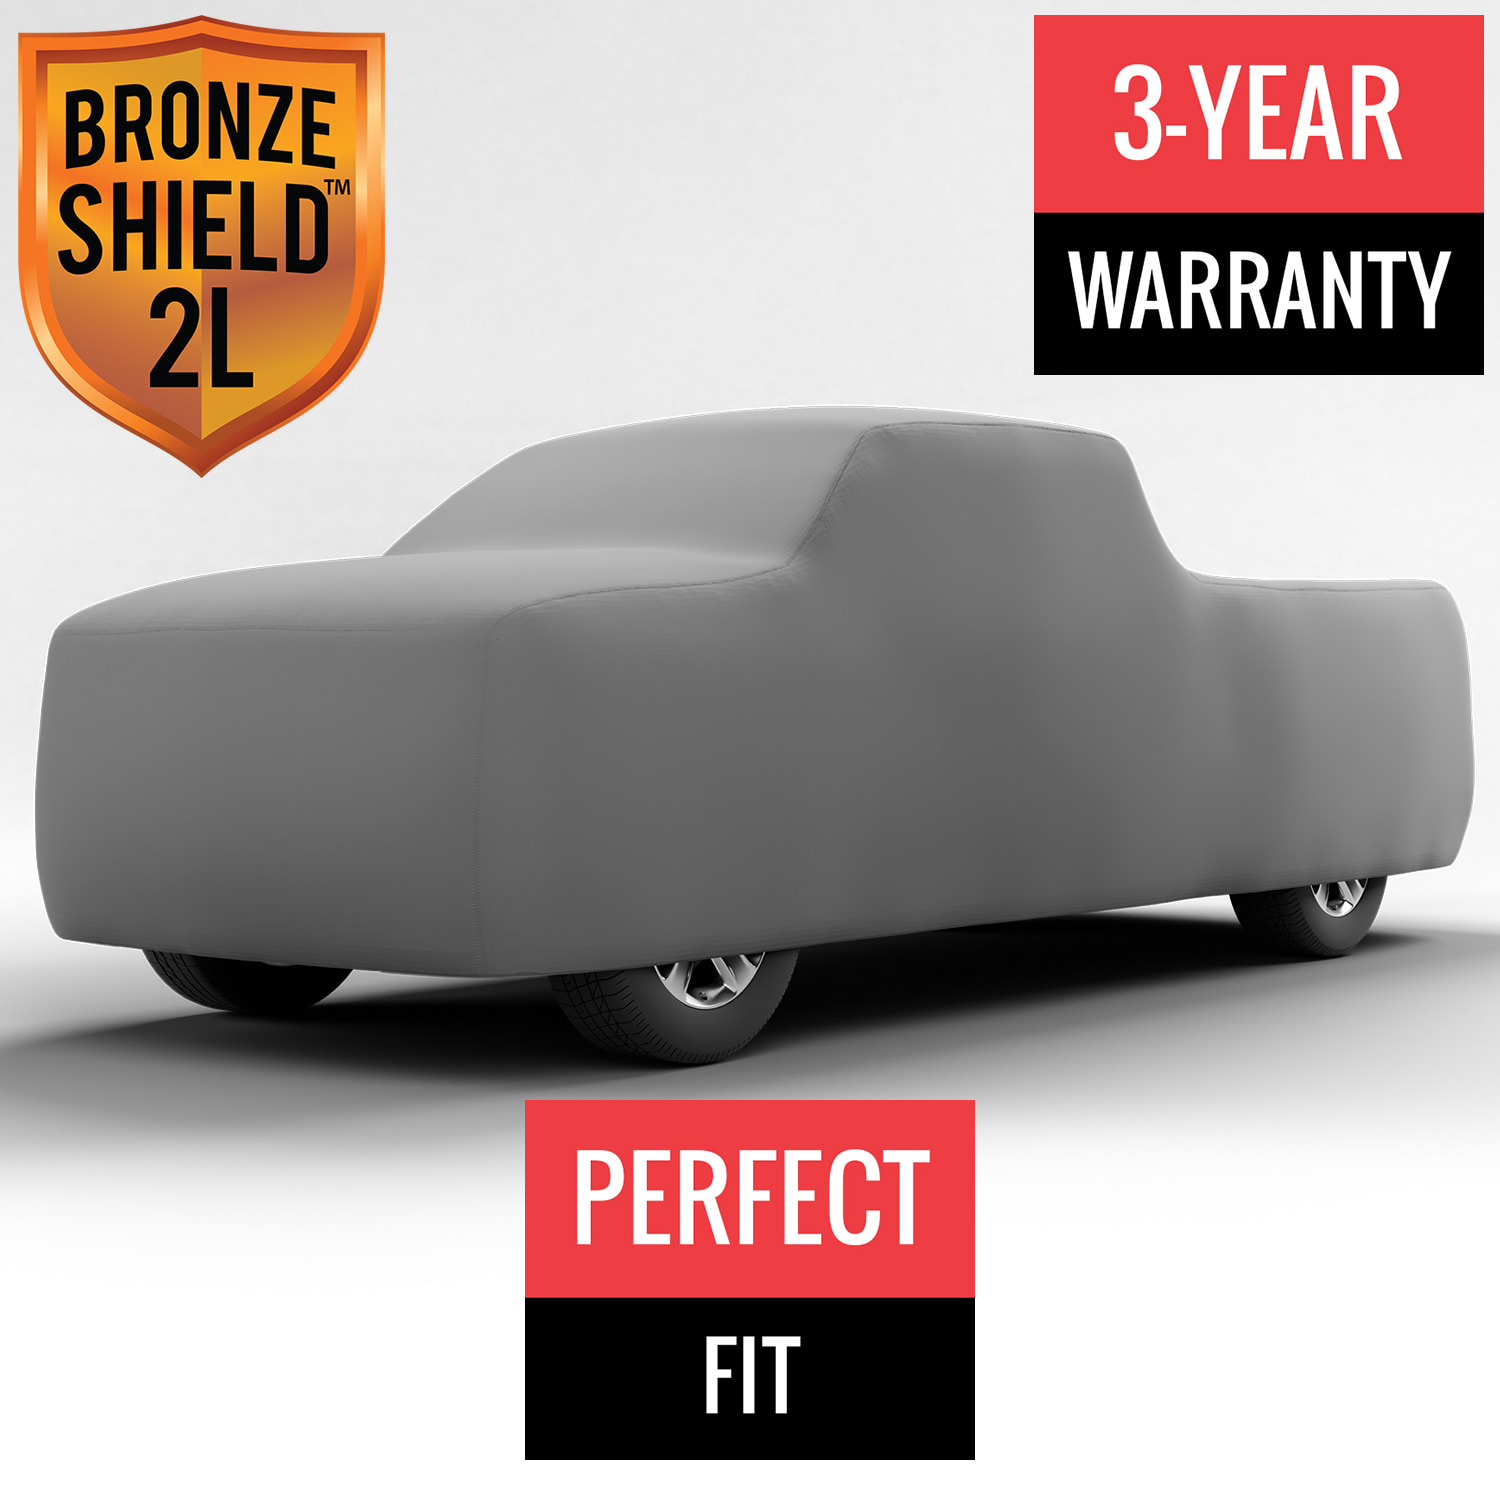 Bronze Shield 2L - Car Cover for Dodge Ram 3500 2004 Regular Cab Pickup 8.0 Feet Bed